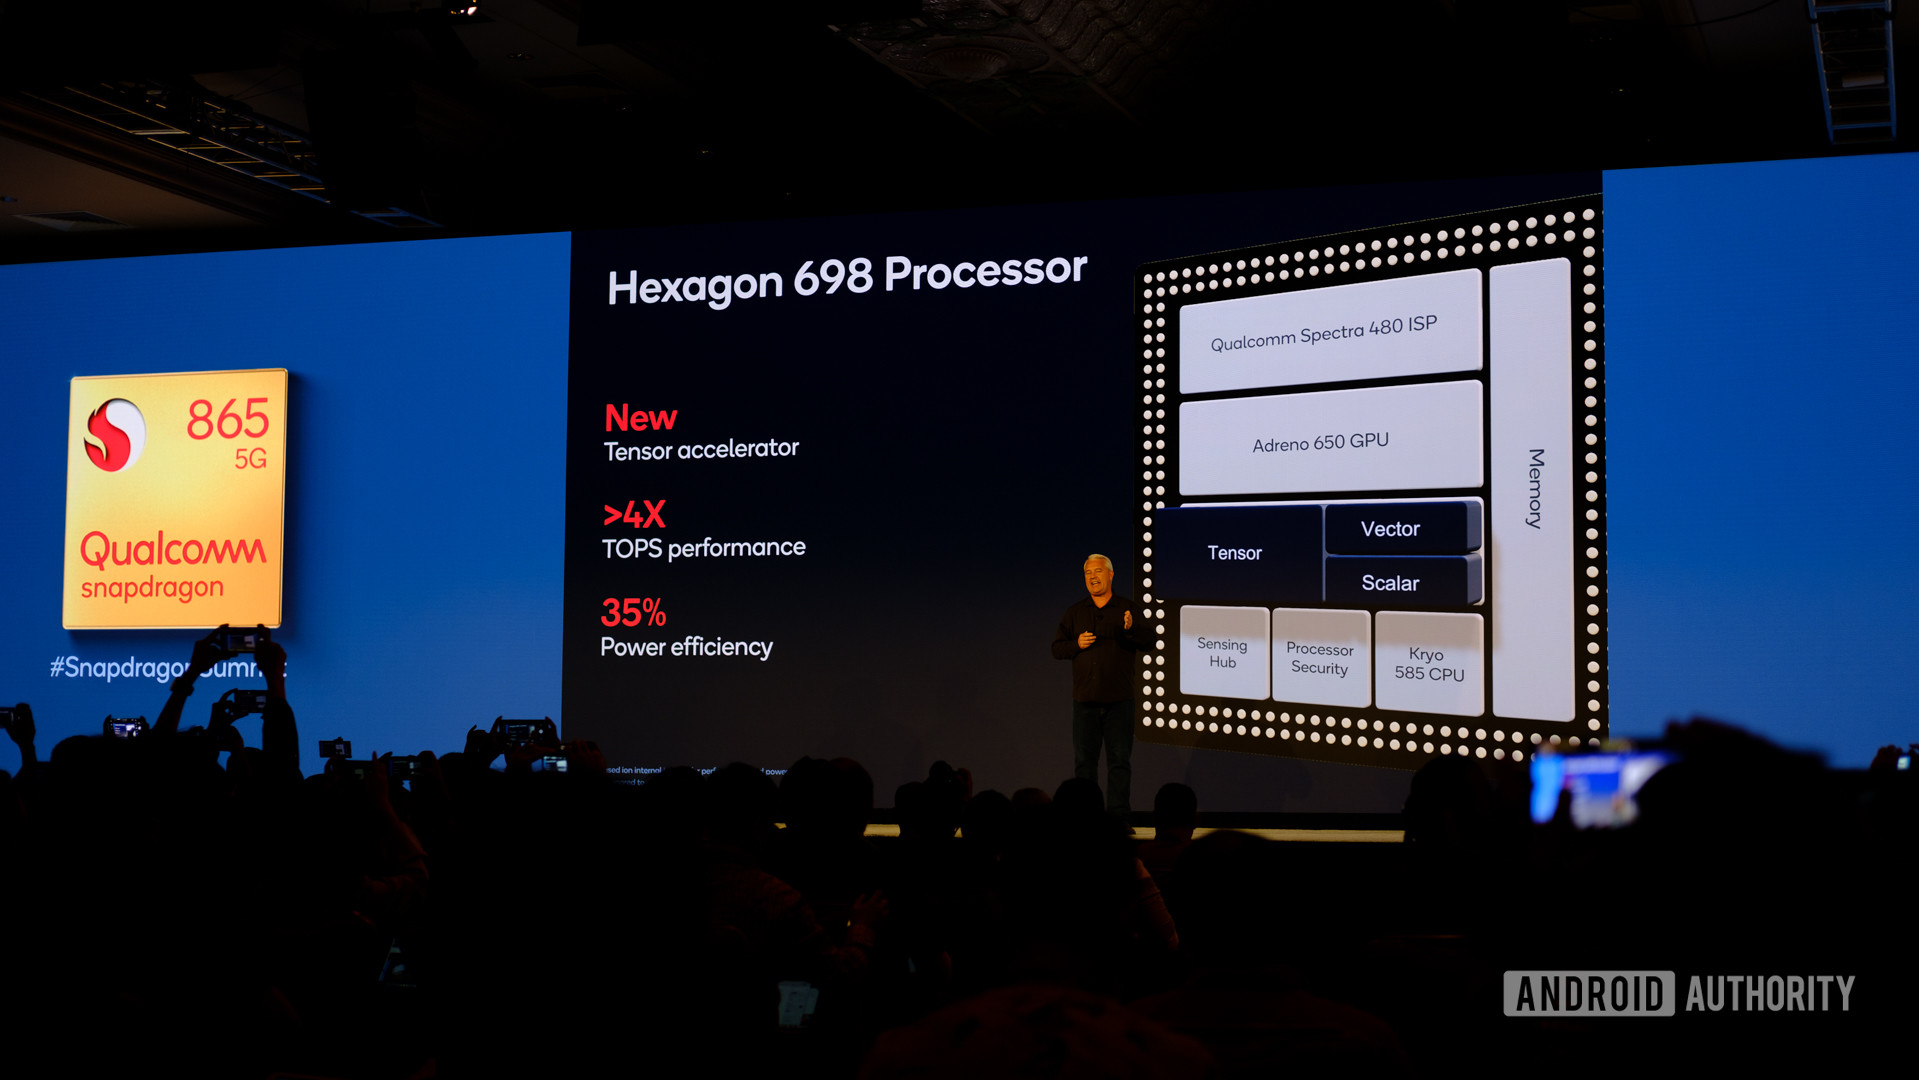 Qualcomm Snapdragon 865 Hexagon 698 slides